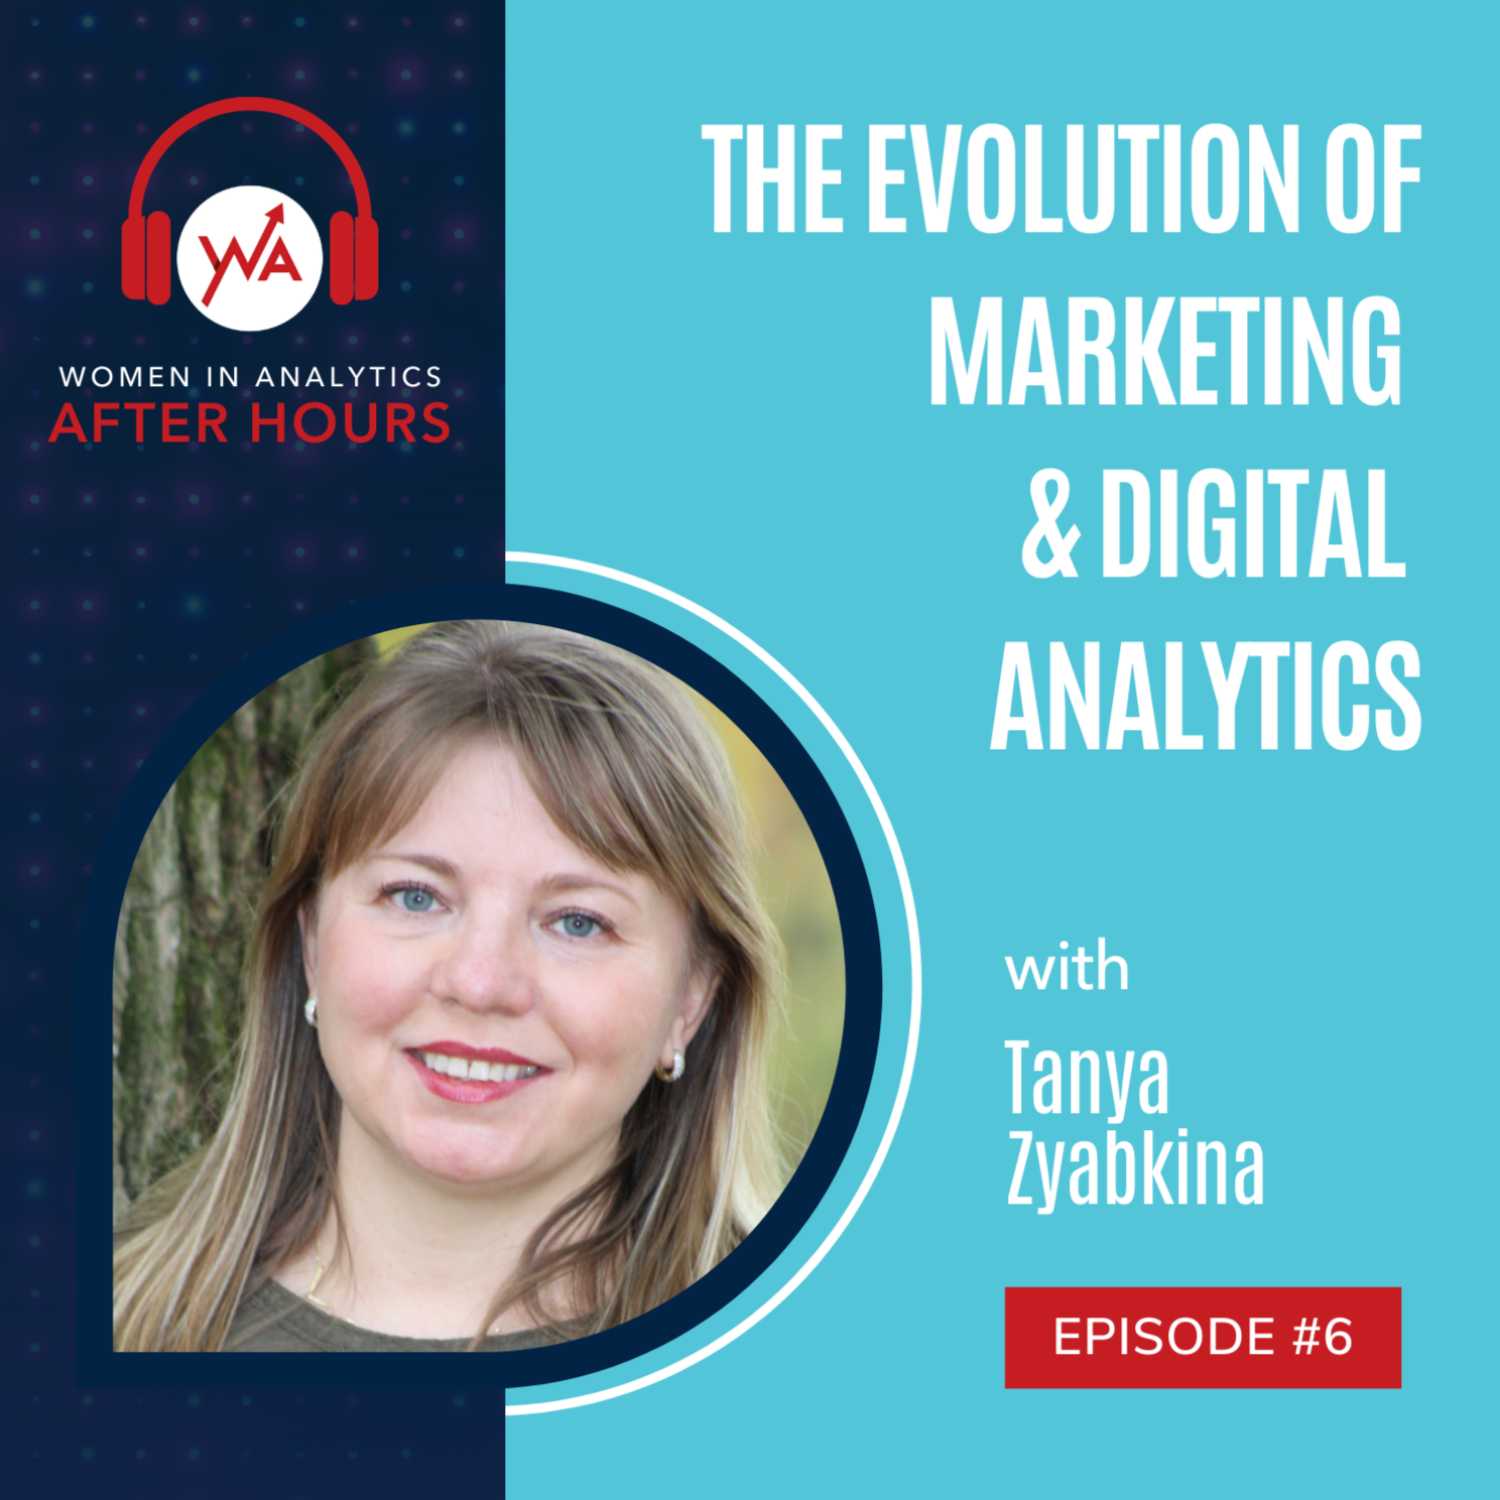 Episode 6 - The Evolution of Marketing and Digital Analytics with Tanya Zyabkina